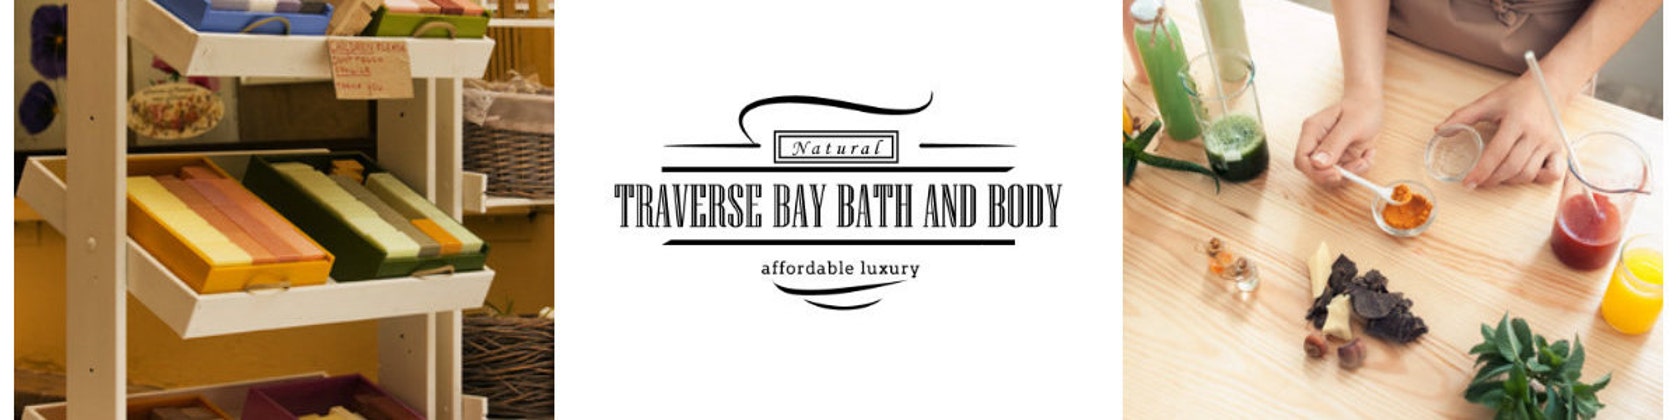 Polysorbate 20. 16 Oz, Soap Making, Lotion, Creams, Massage Oil, Bath,  Beauty, Lip Balm 